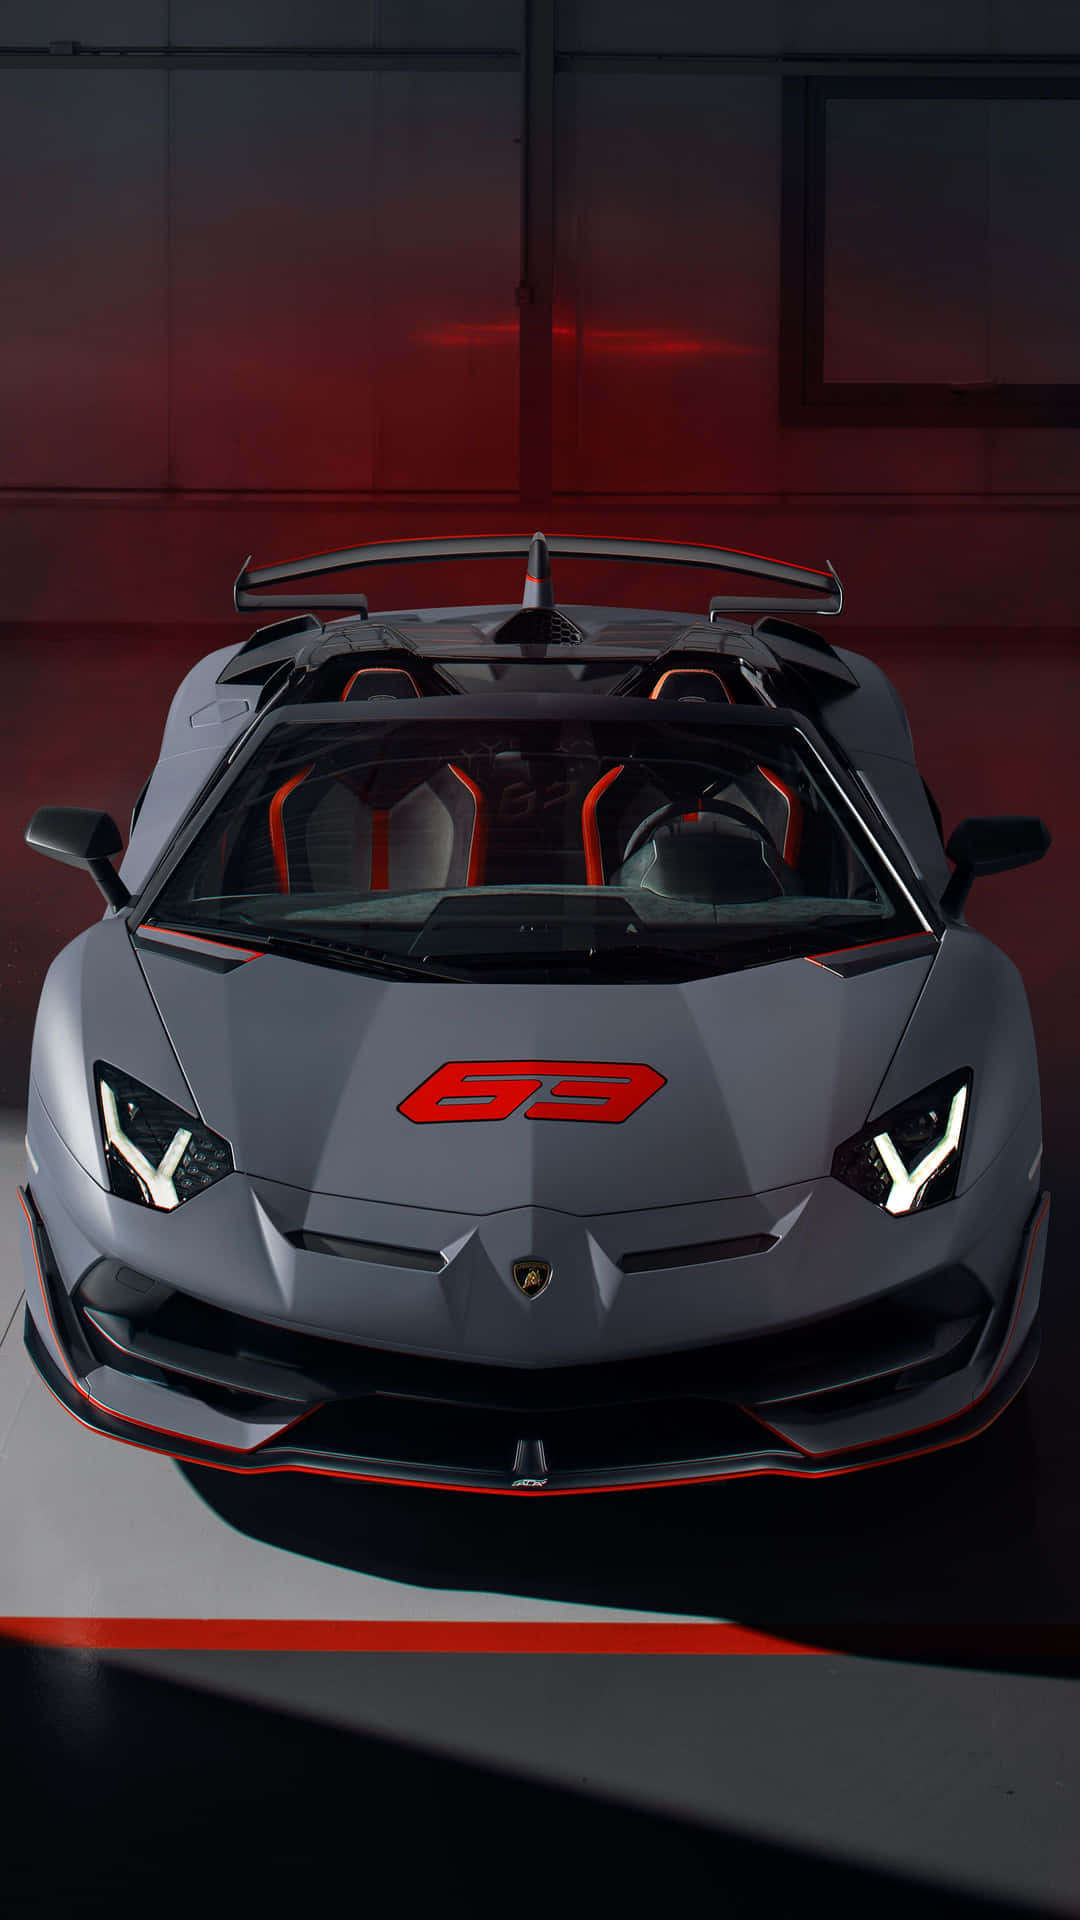 Dasneueste In Der Luxustechnologie: Lamborghini-telefon Wallpaper